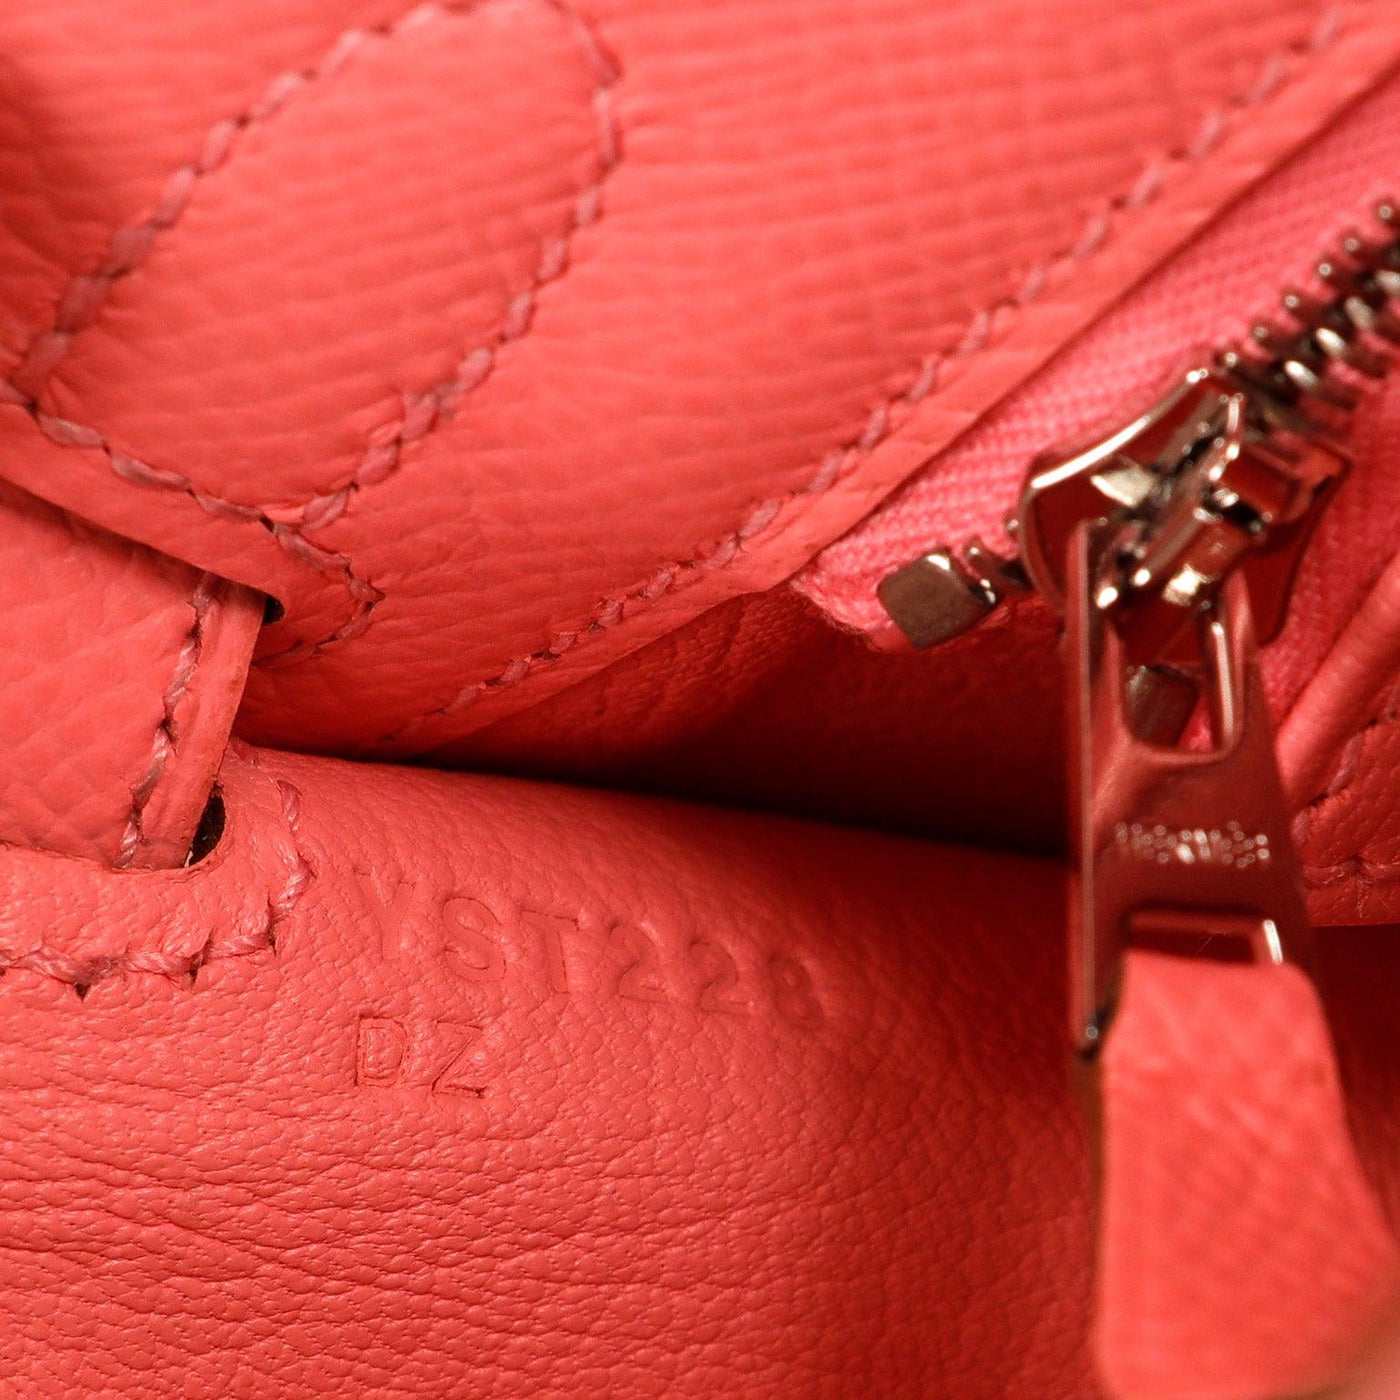 Hermès New 25cm Rose Confetti Sellier Epsom Kelly with Palladium Hardware - Only Authentics